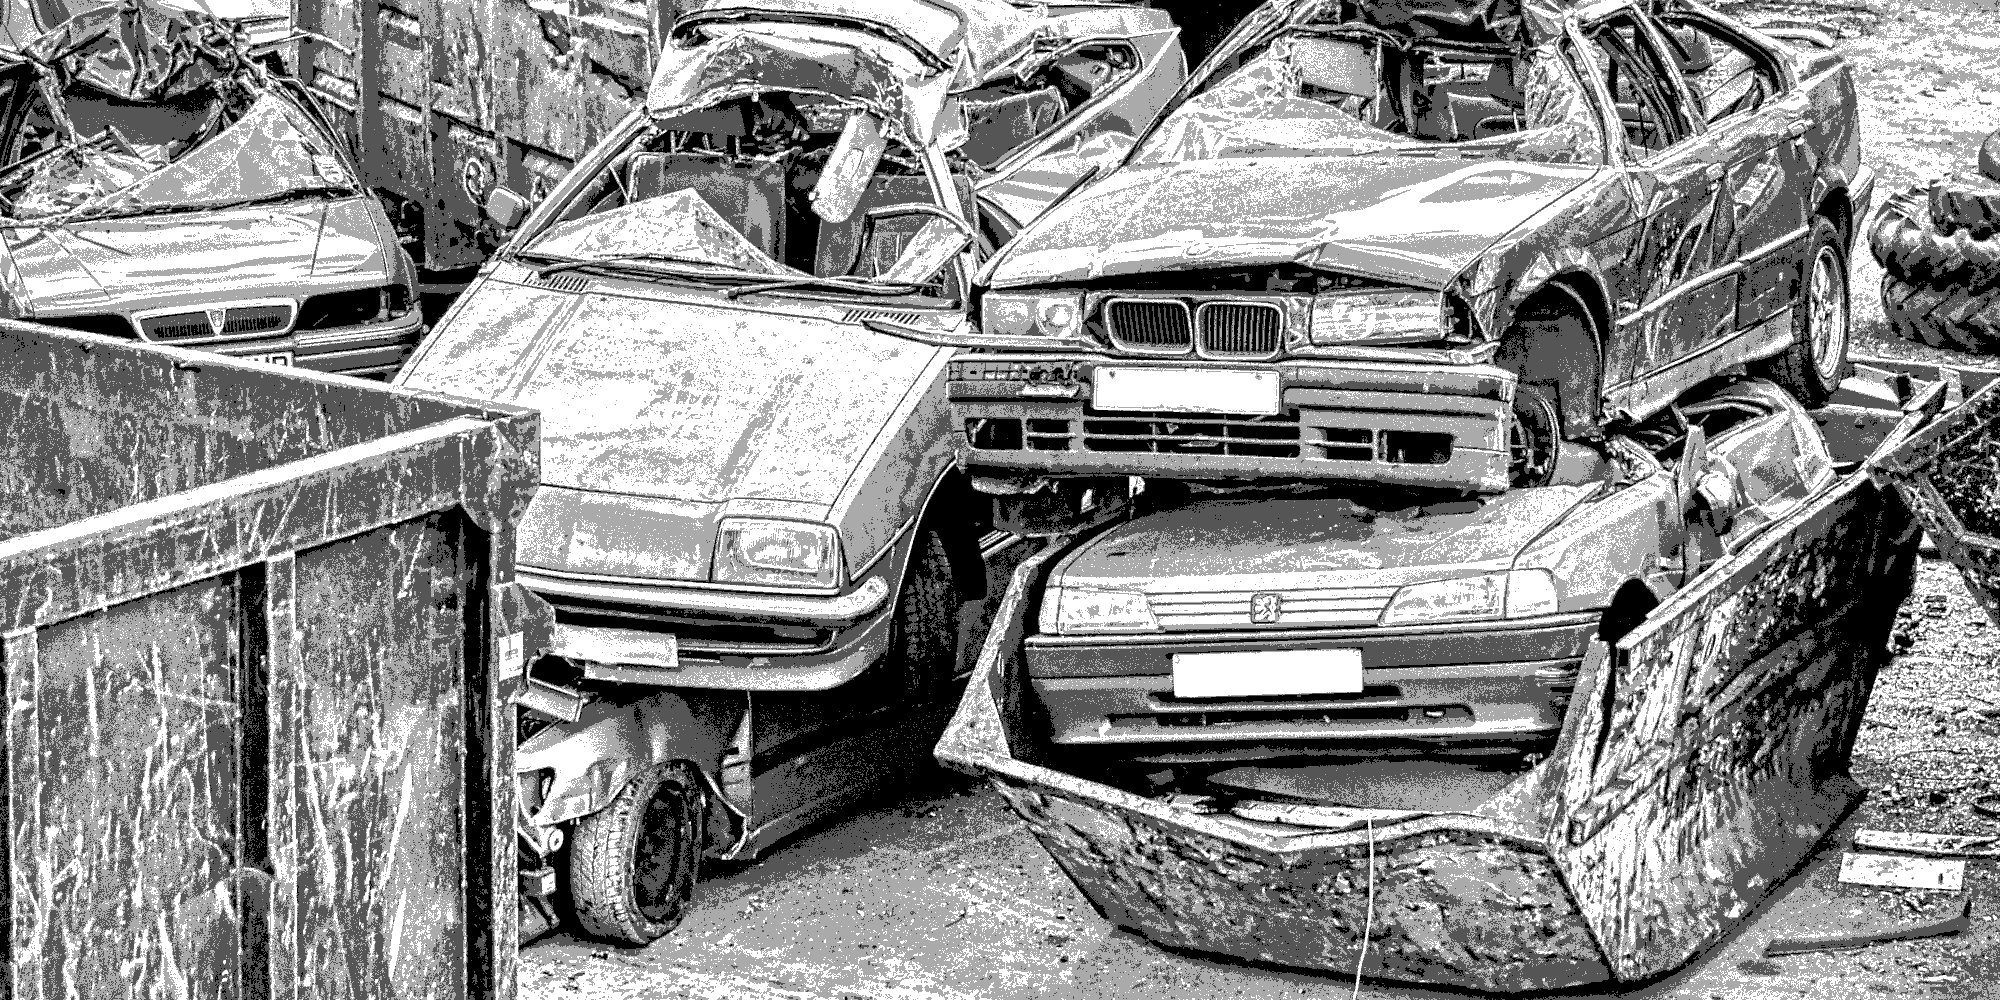 Environmental disposal of car wrecks